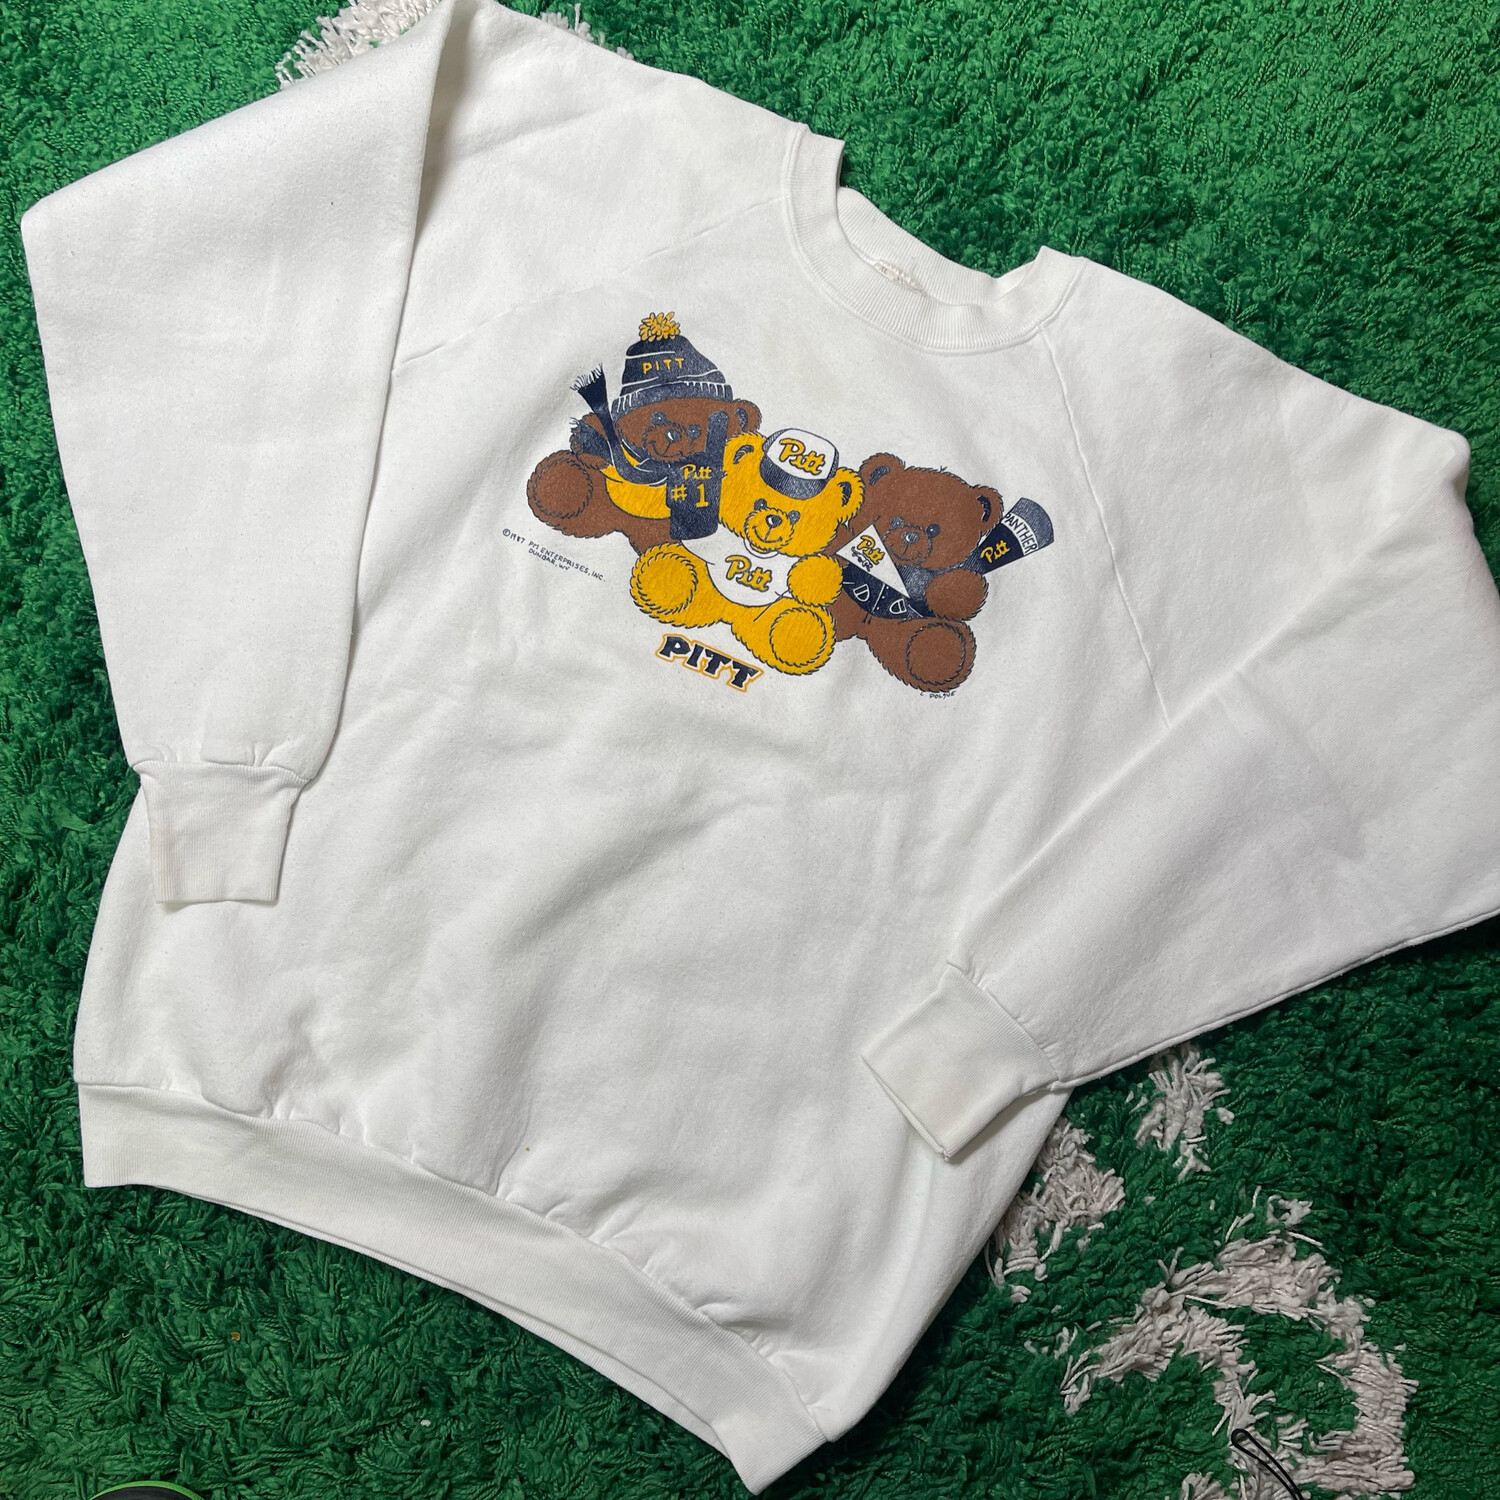 Pittsburgh Panthers 1987 Crewneck Sweatshirt Size XL